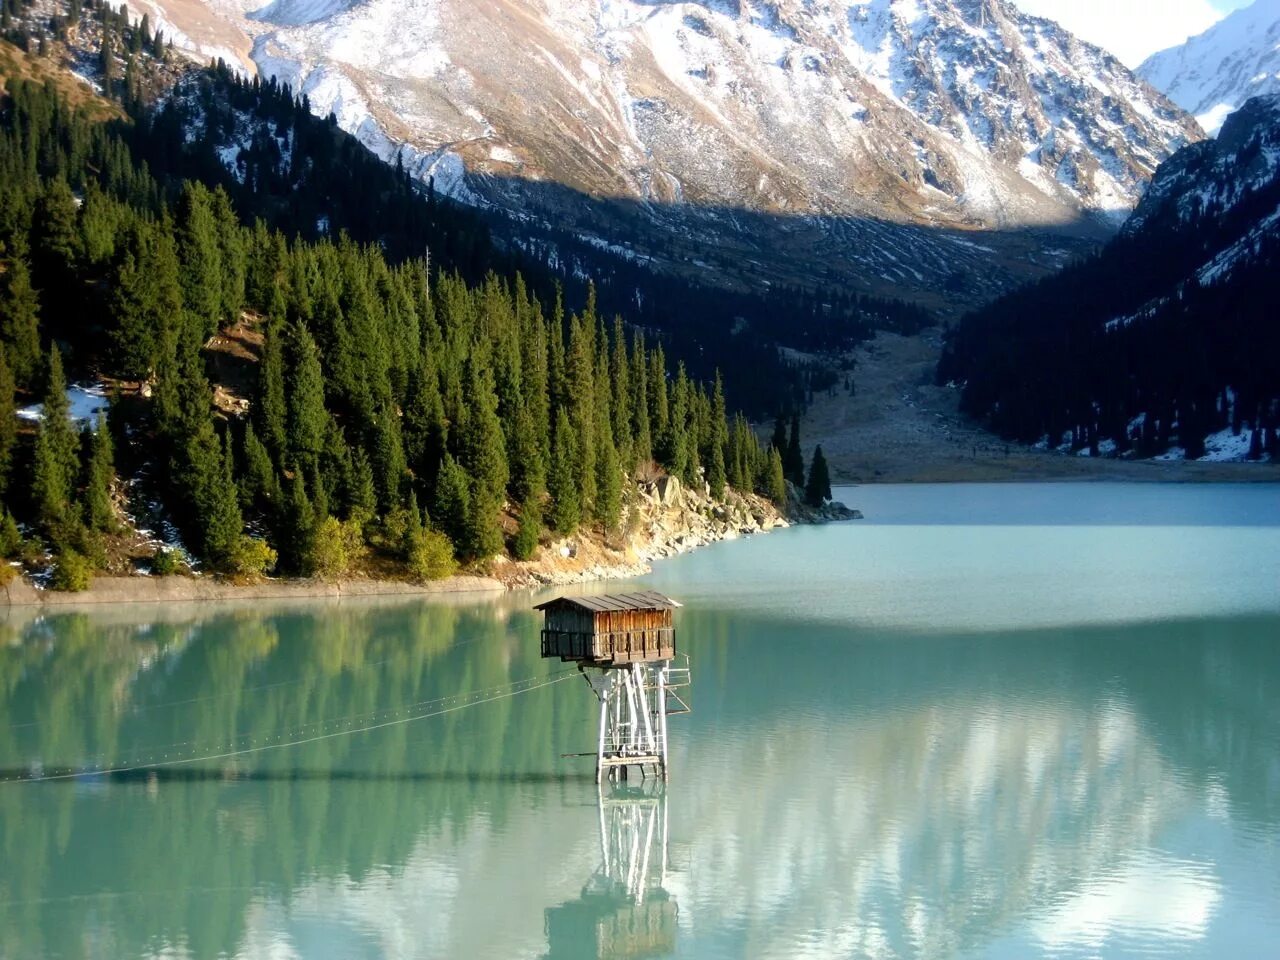 Чудеса природы казахстана. Бао озеро Алматы. Алма-Ата Казахстан озеро. Горы Алматы Бао. Алма Ата озеро в горах.